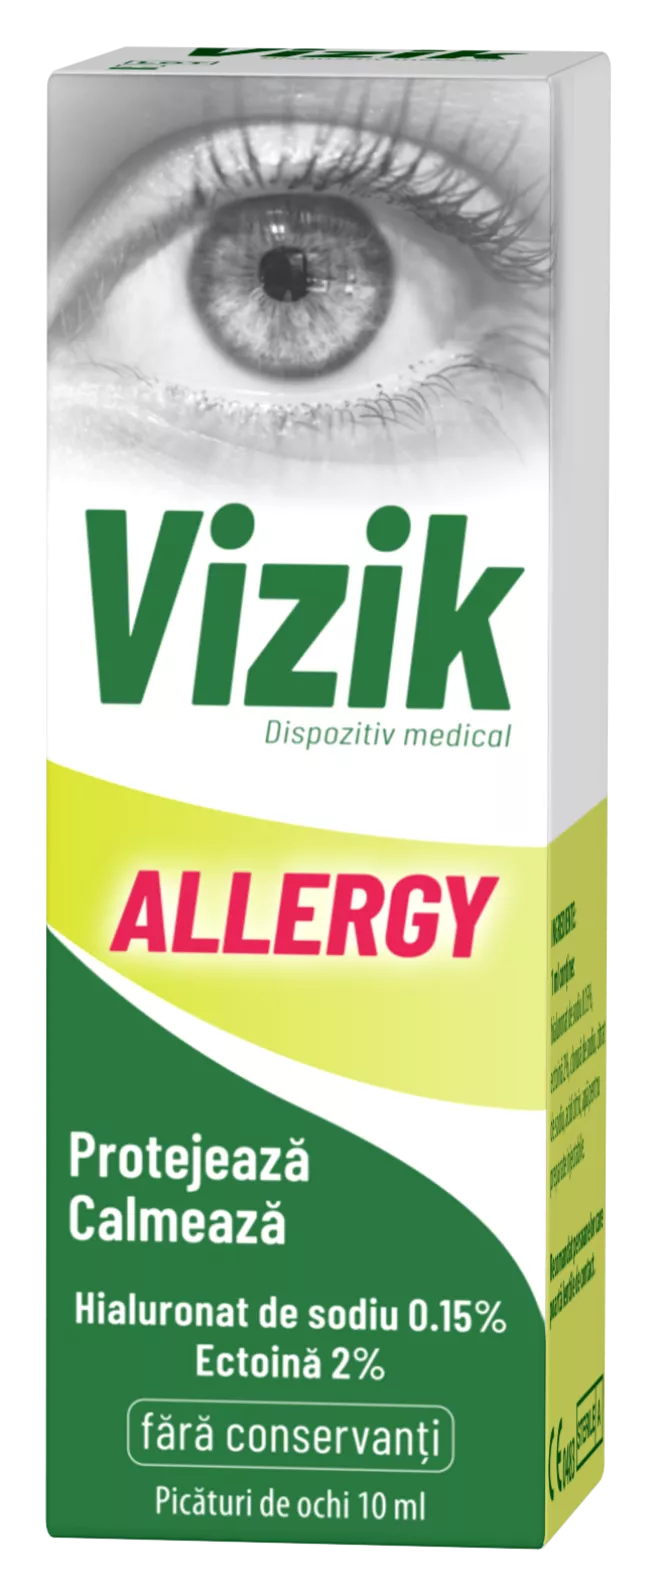 Vizik Allergy picaturi ochi 10 ml (Zdrovit), [],epastila.ro